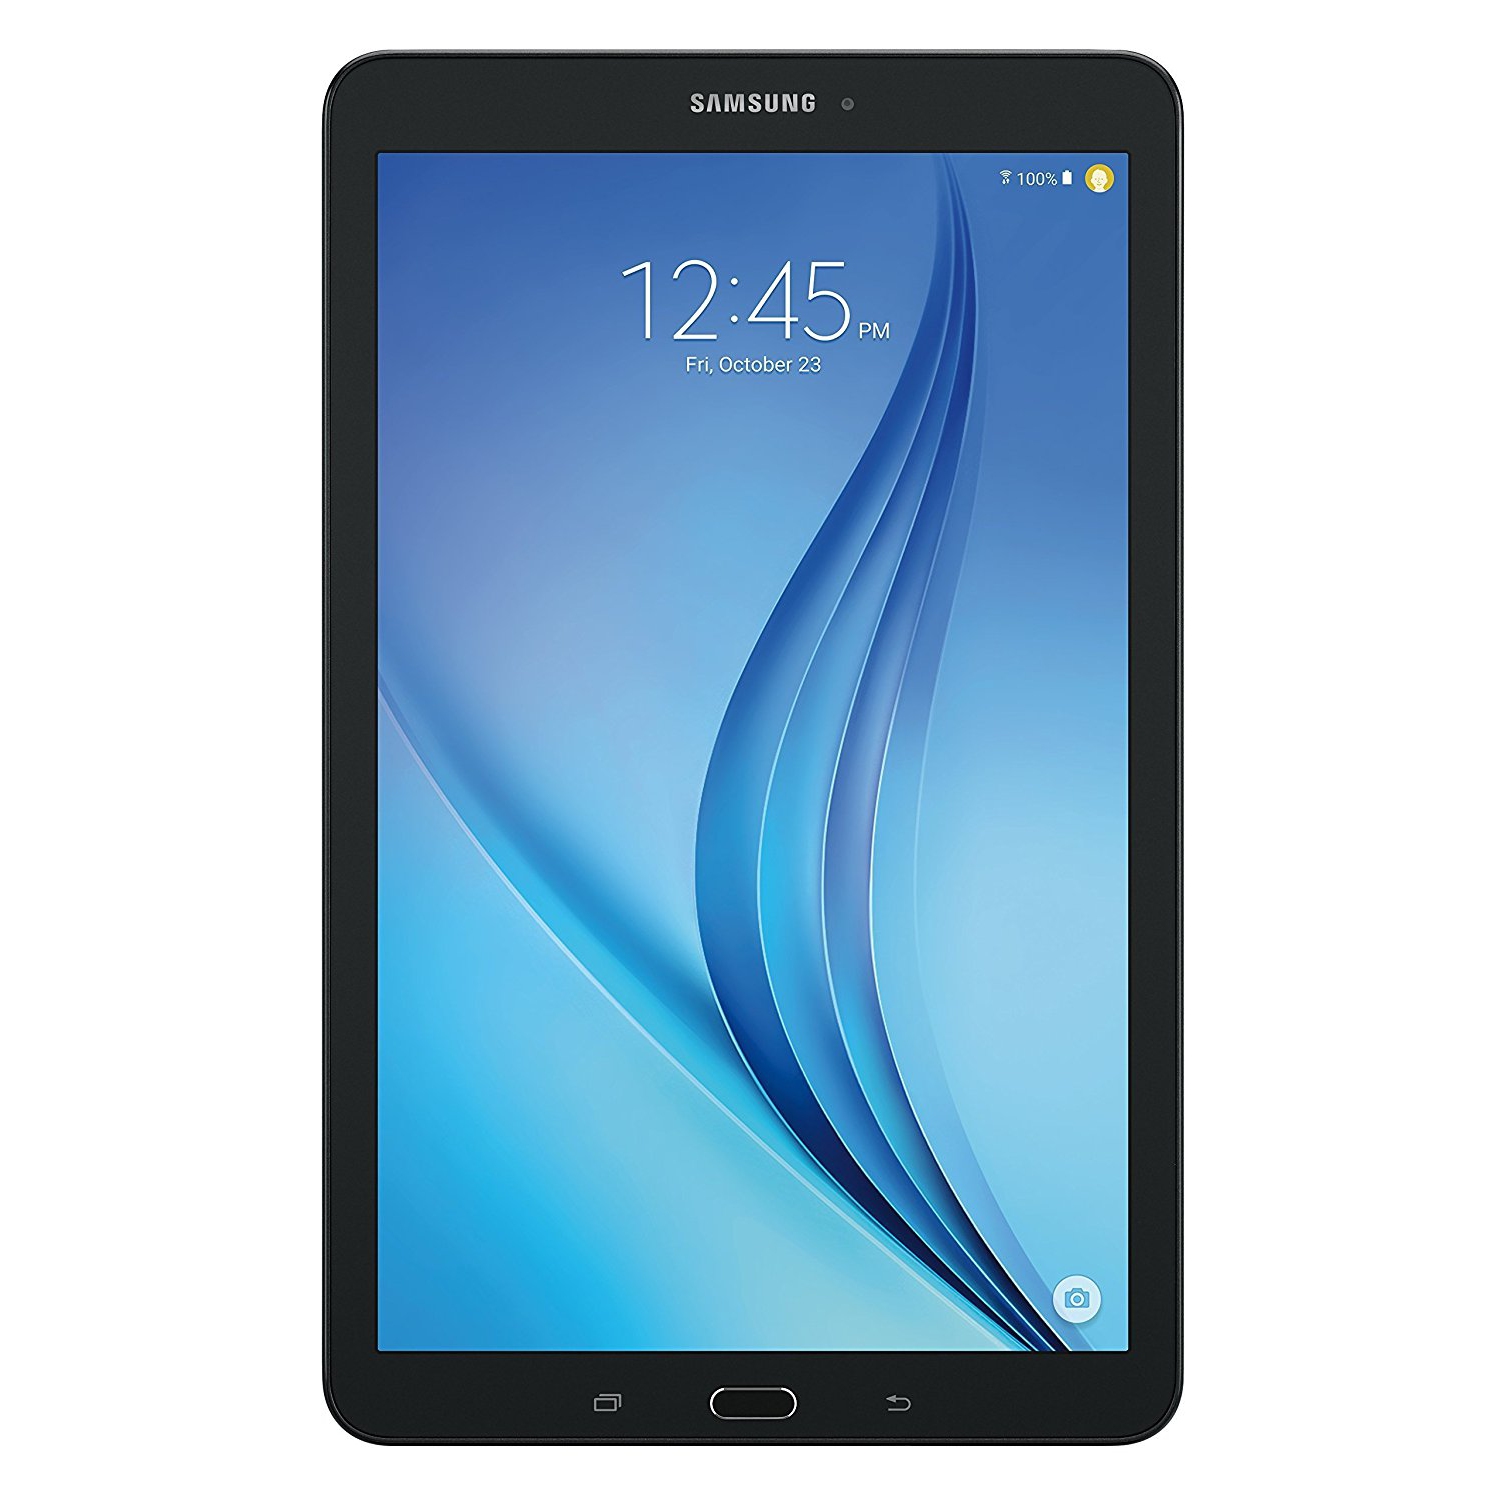 Refurbished (Good) - Samsung Galaxy Tab E 9.6" 16GB Black Wi-Fi SM-T560NZKUXAR